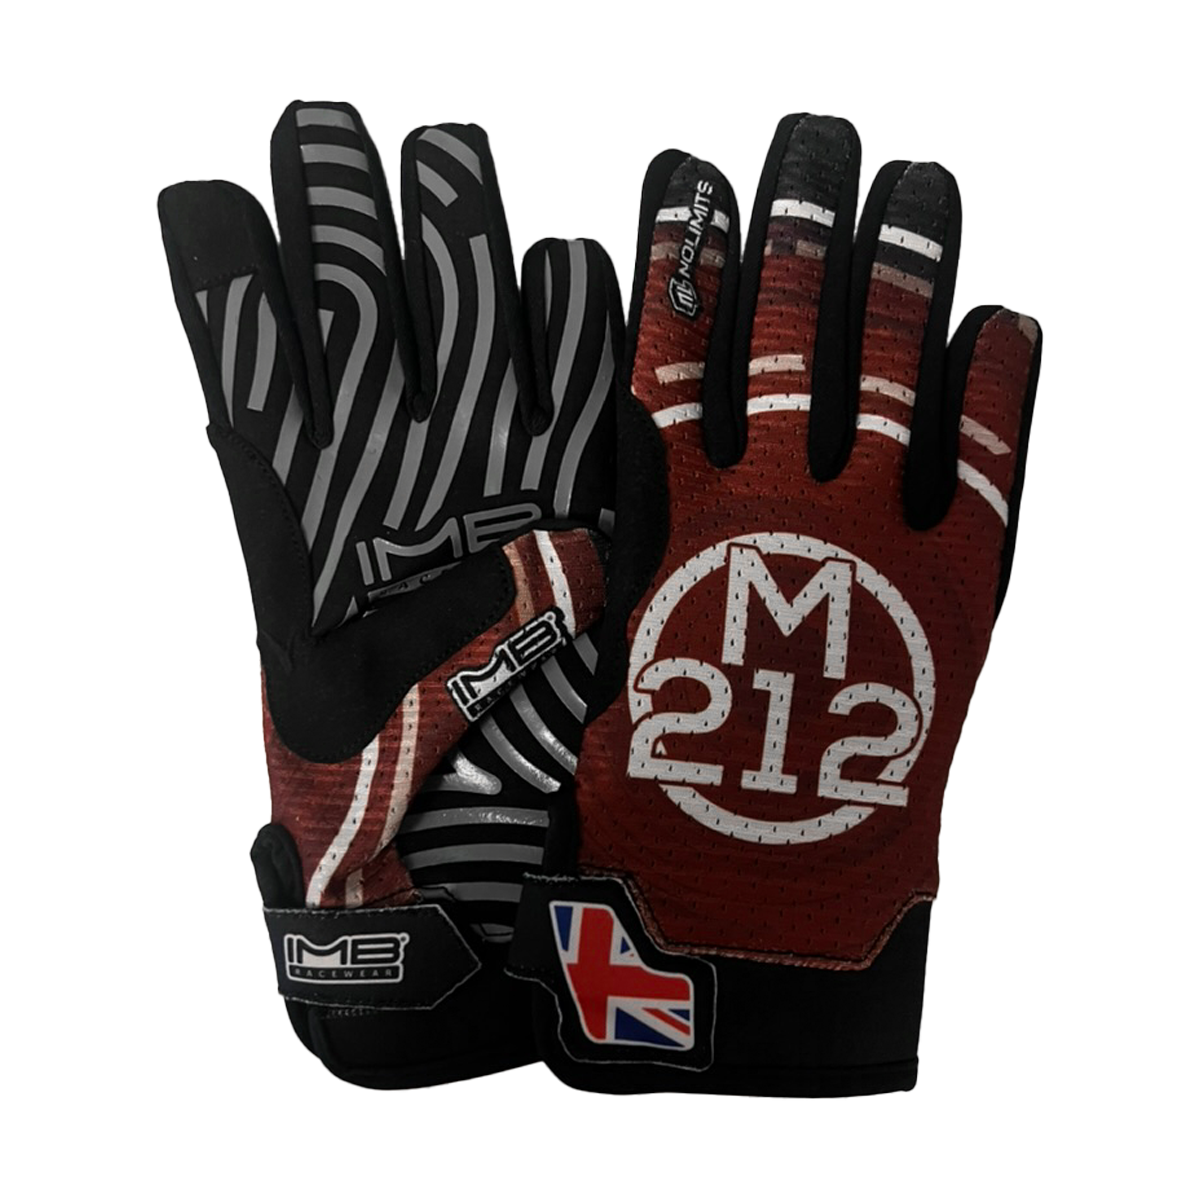 Matt212 SSG-2 Short Sim Racing Gloves